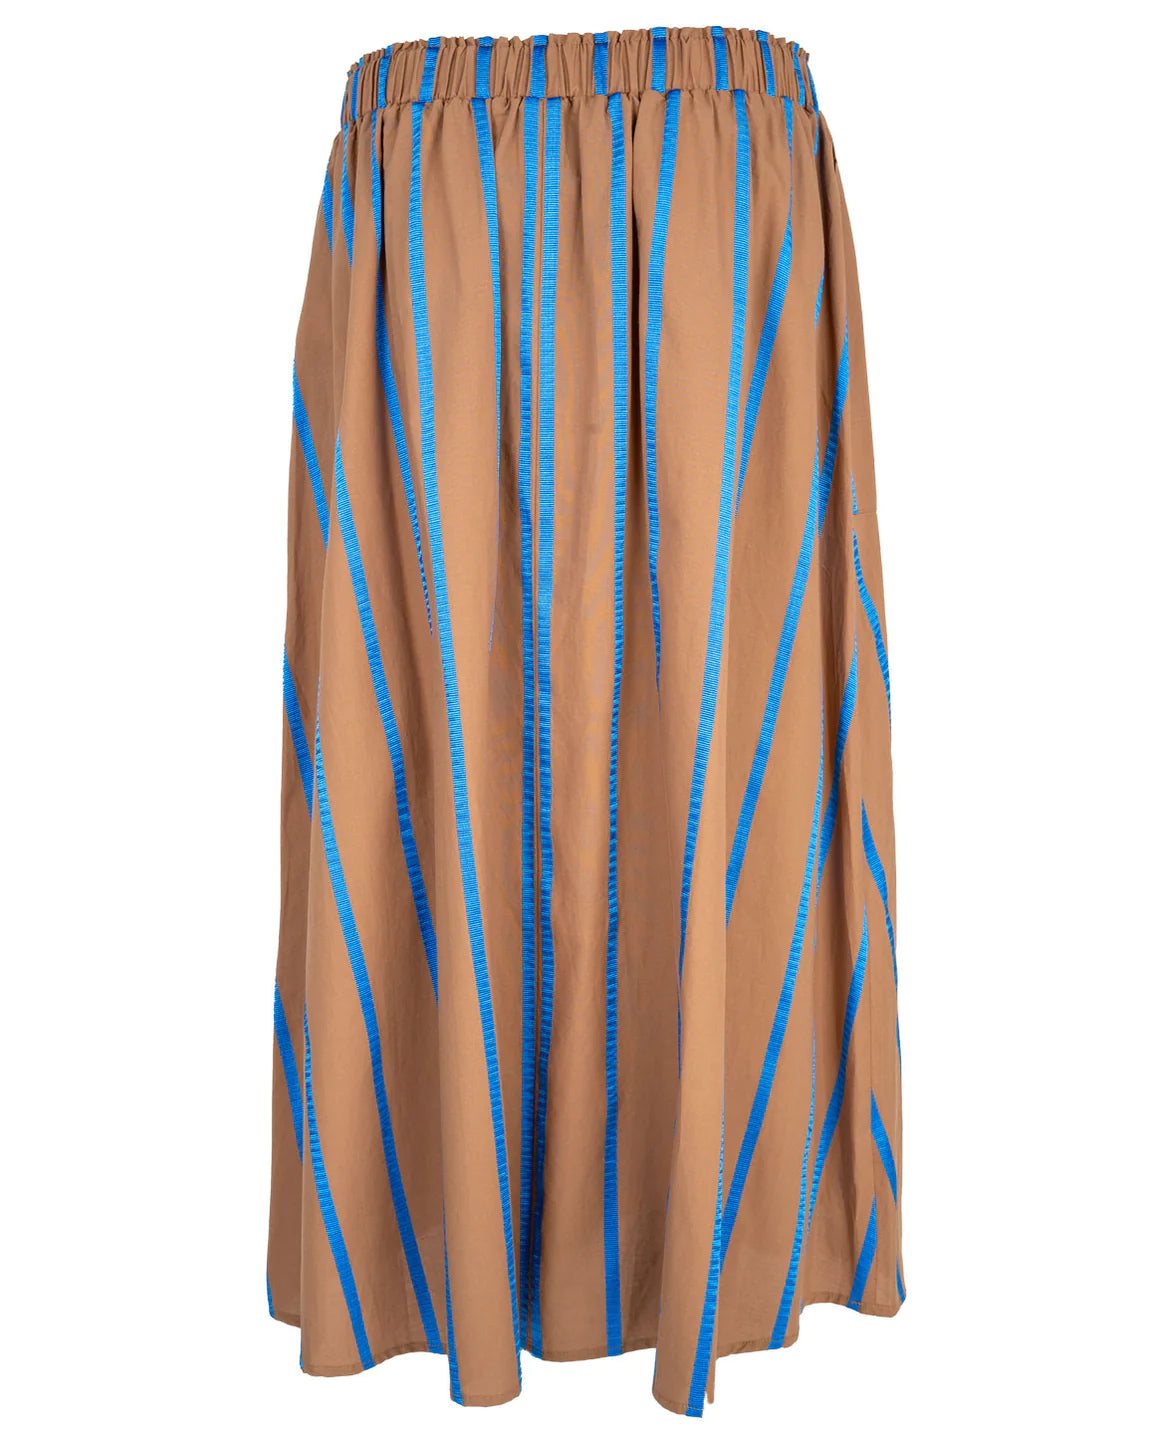 Stinna Skirt - Camel / Blue Stripe